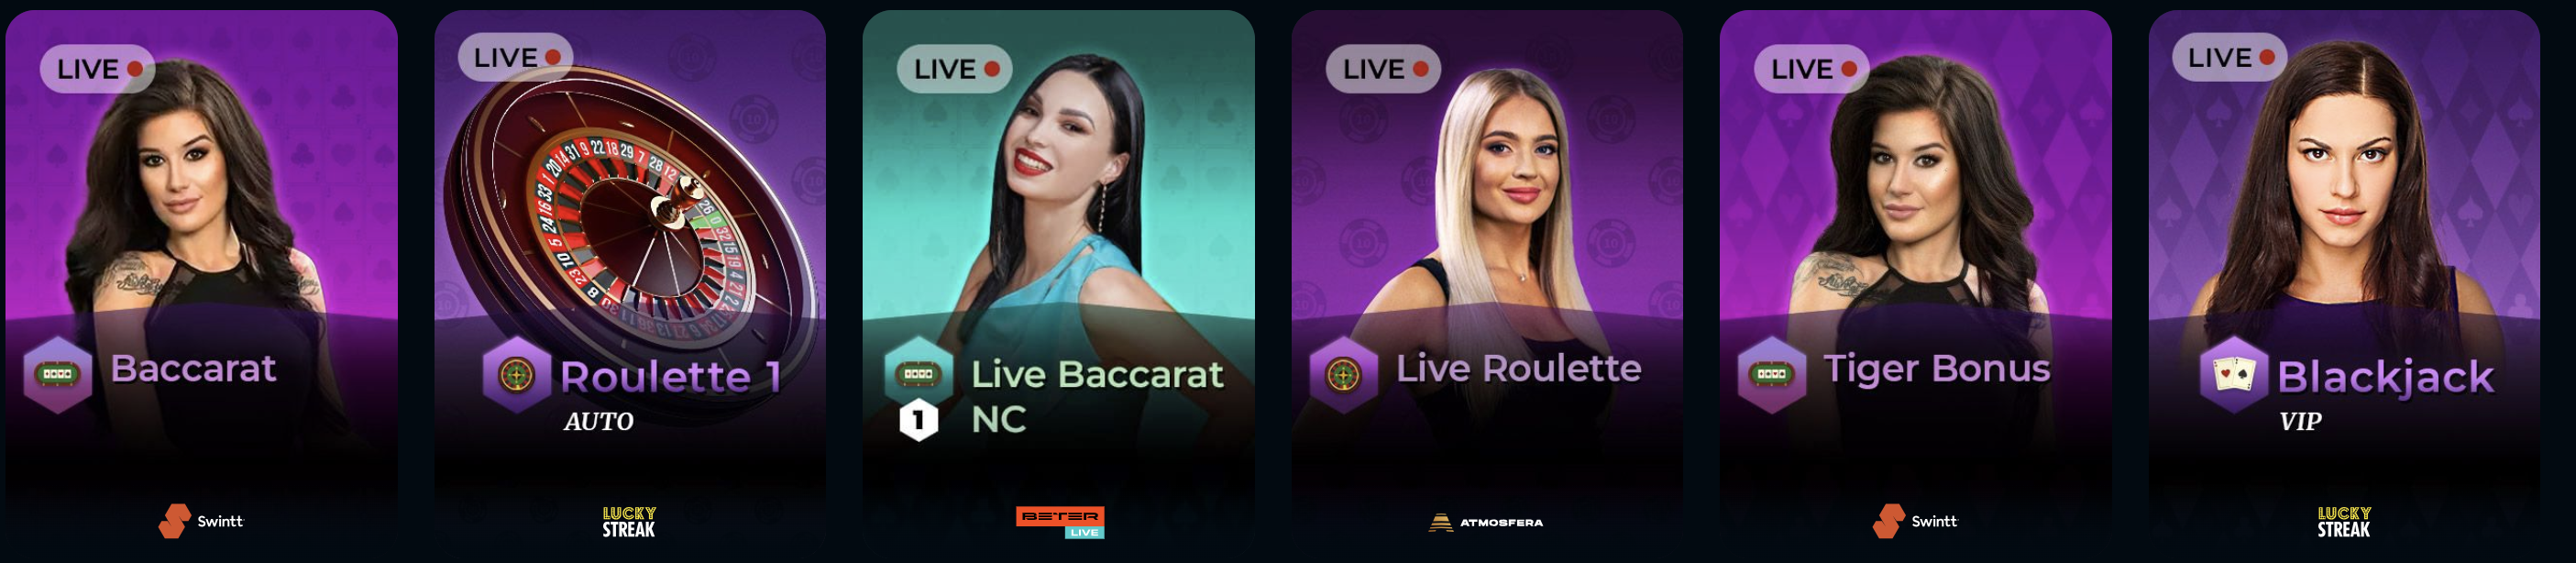 RocketPlay Casino live dealers